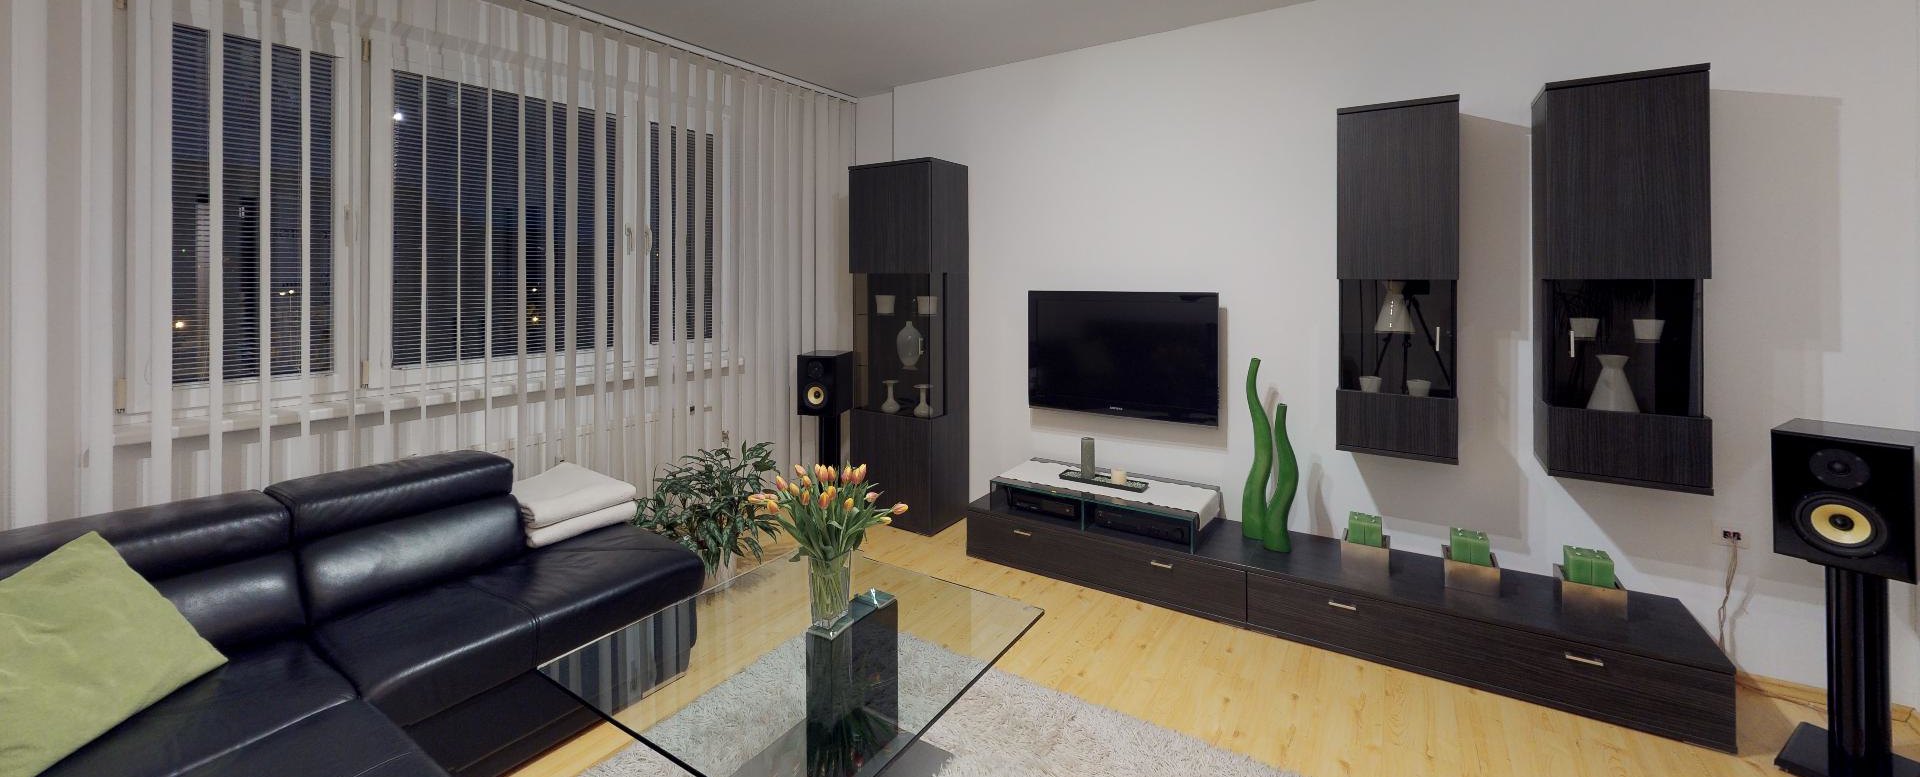 Obývacia izba 4-izbového bytu na ulici Milana Matečka v Devínskej Novej Vsi